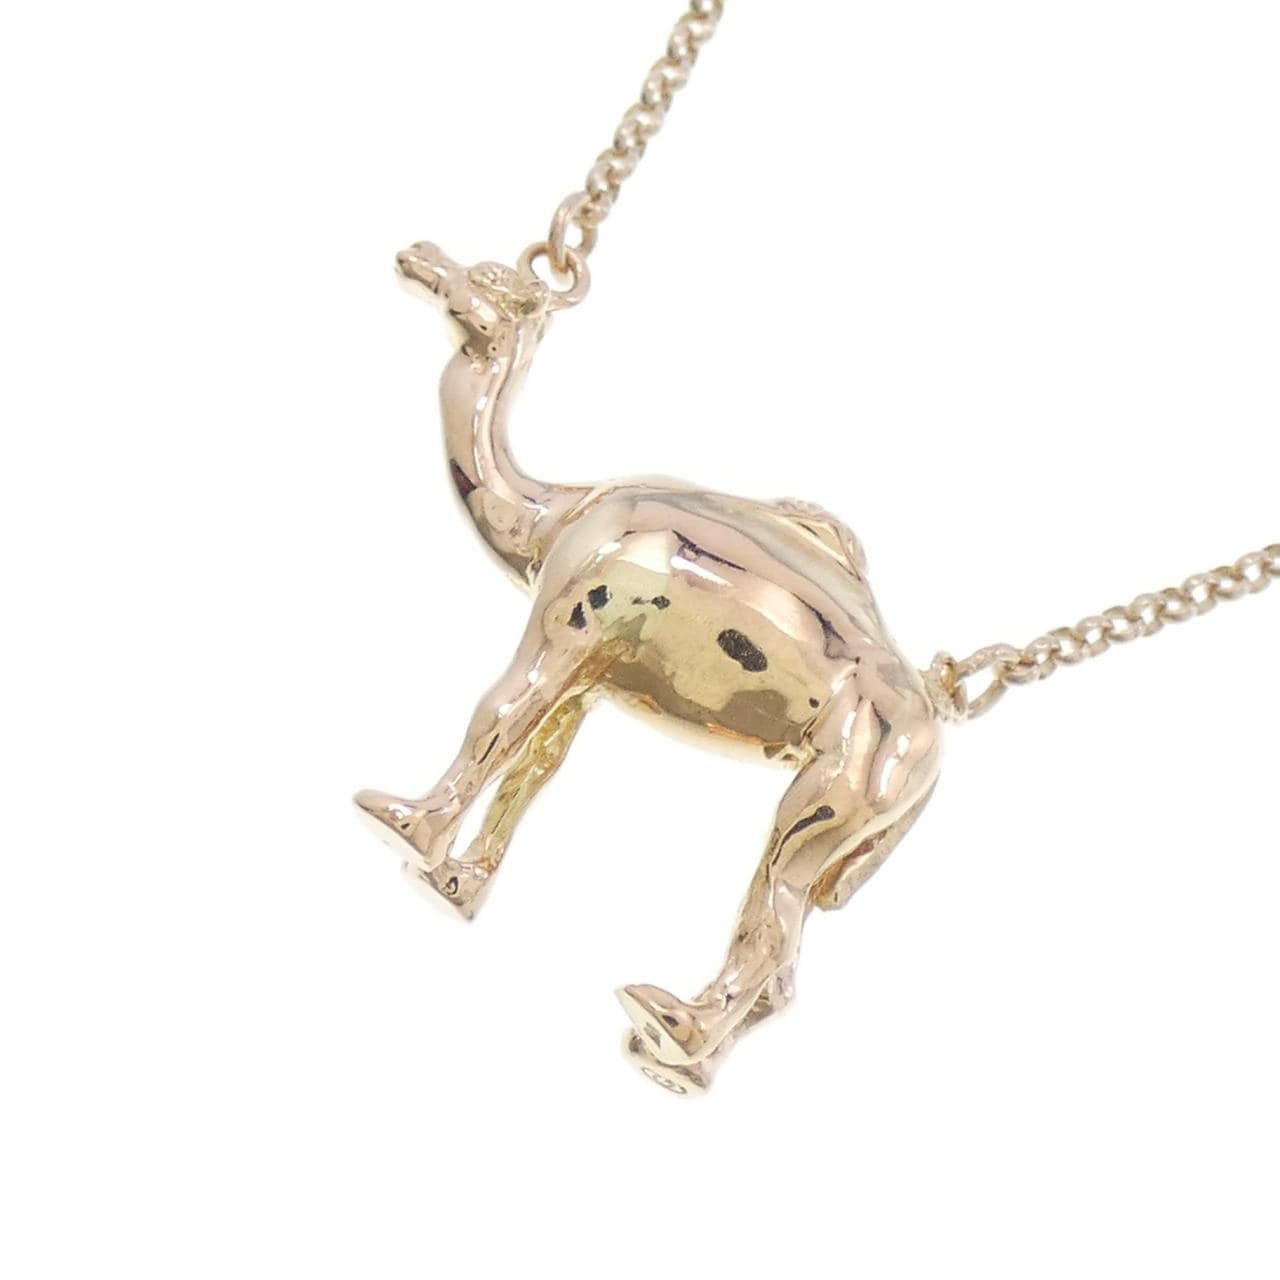 K18PG camel necklace